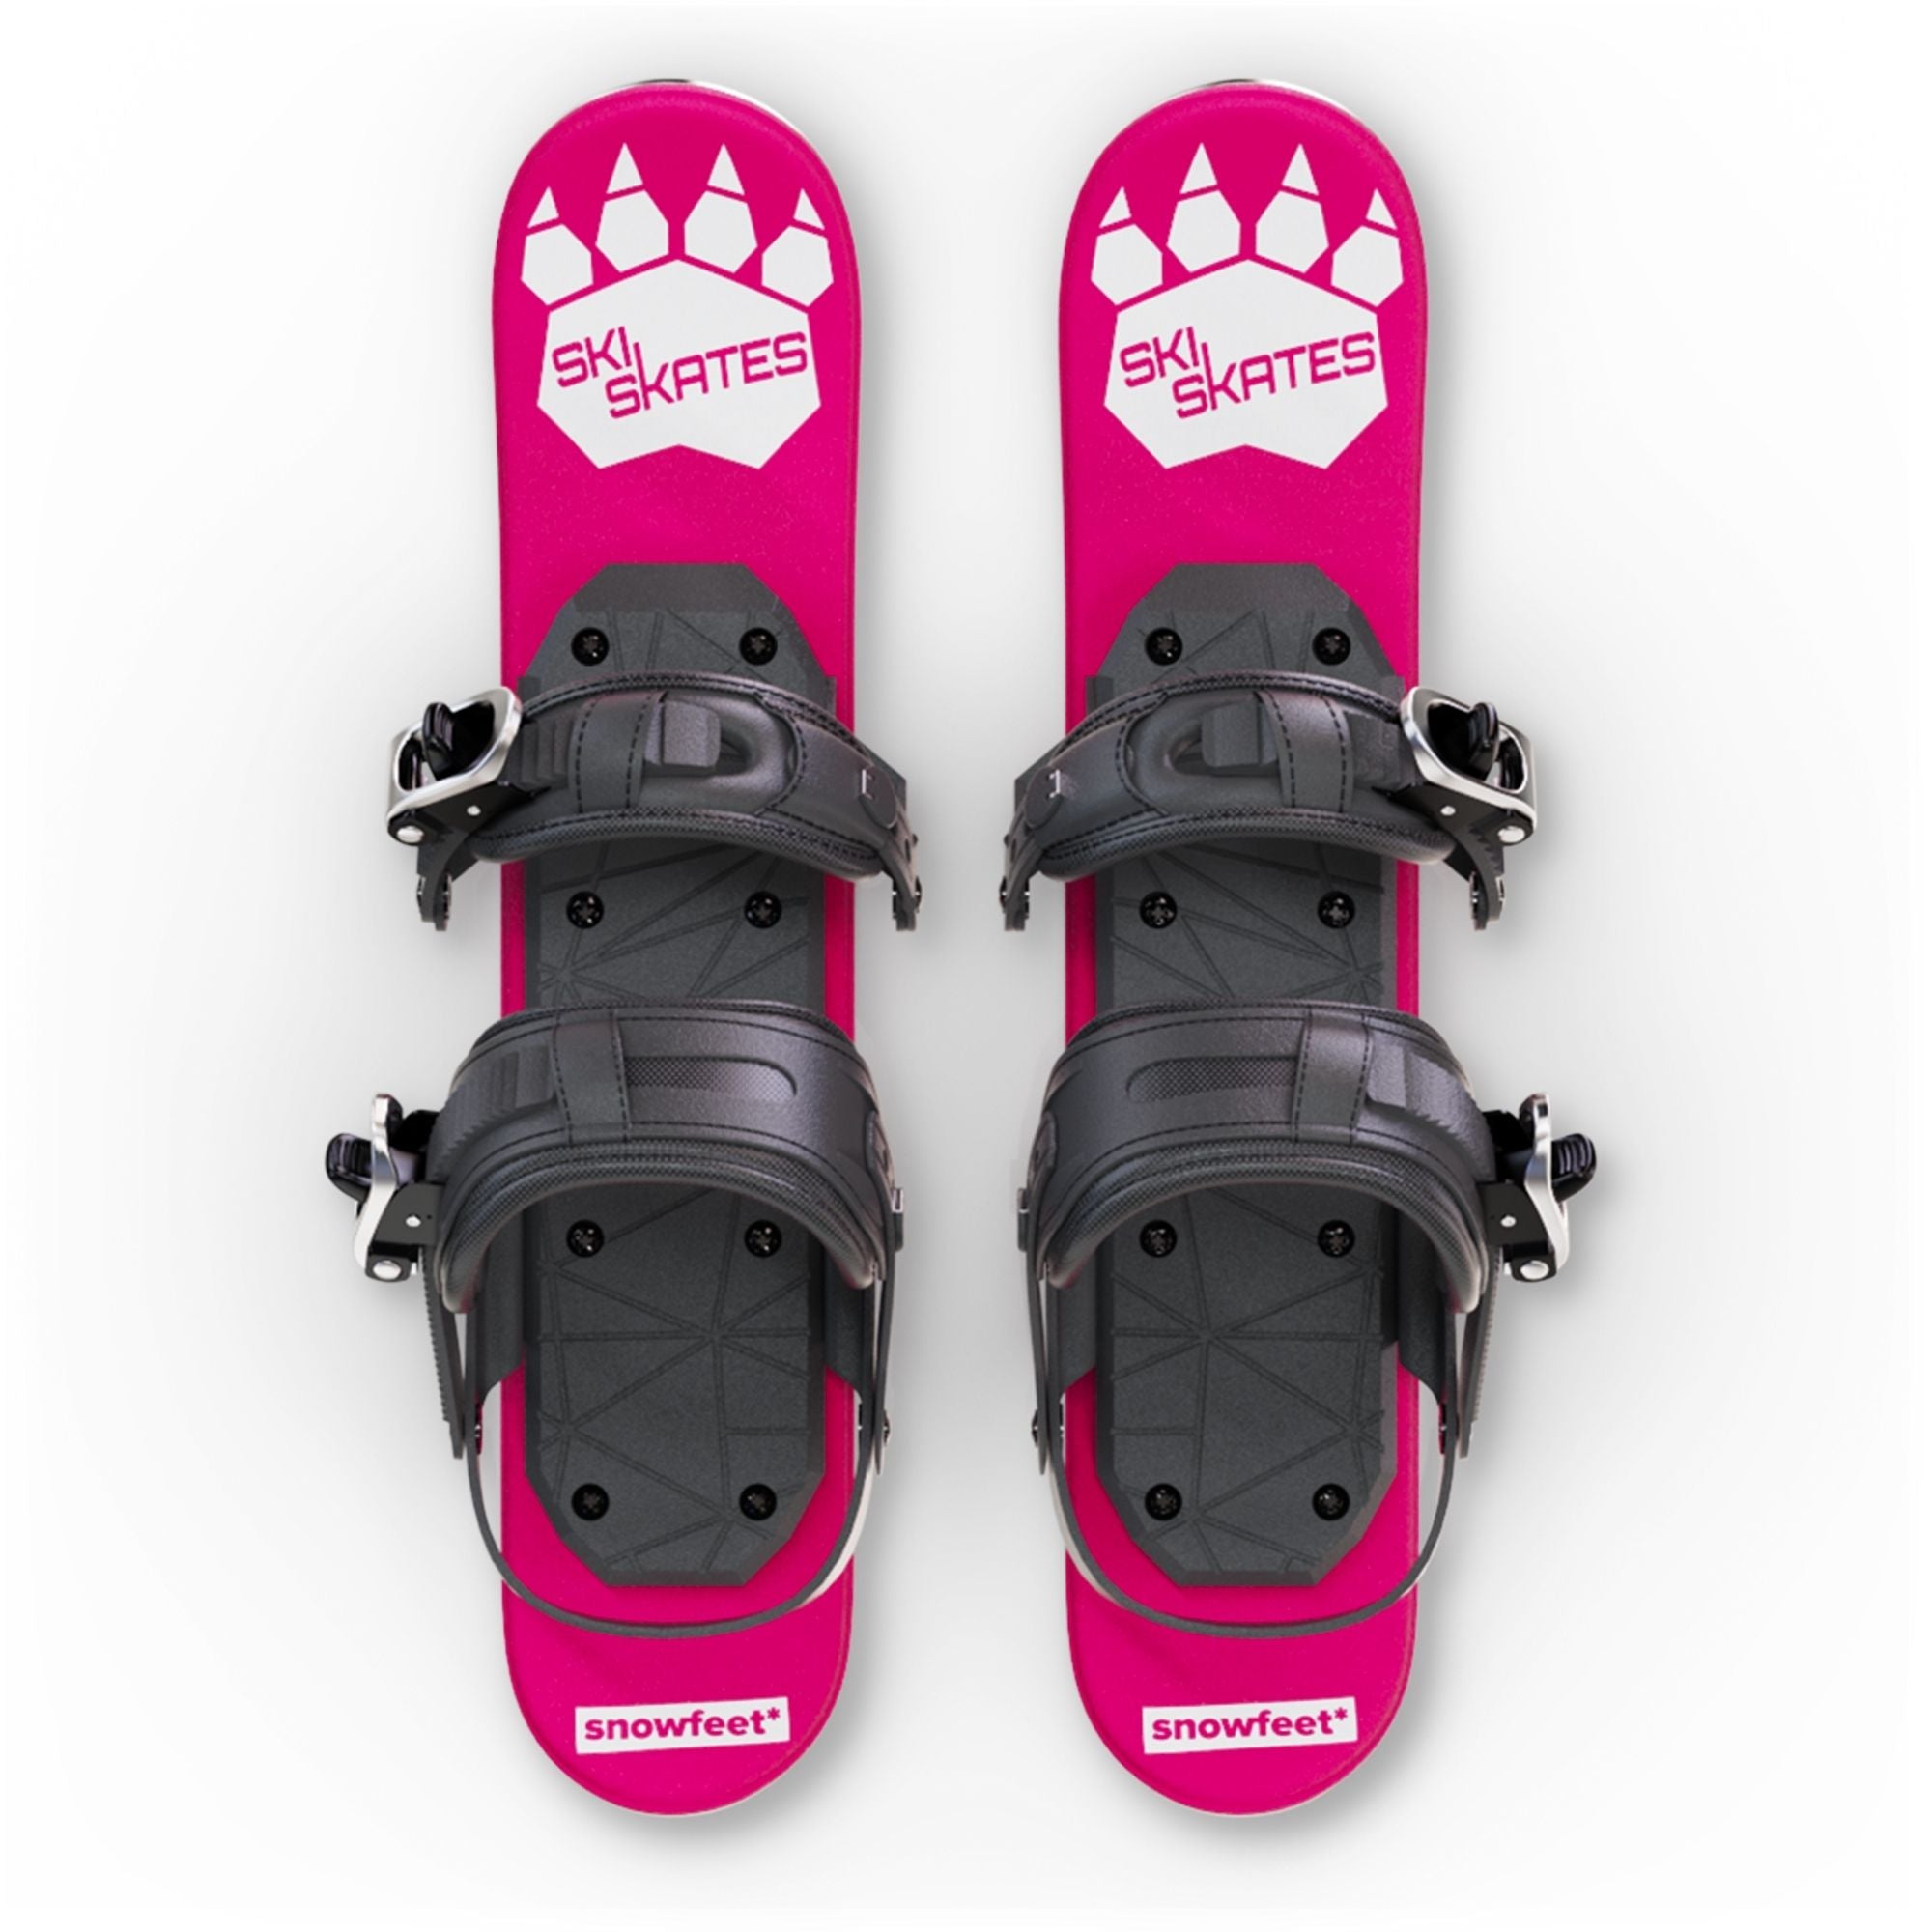 Skiskates Snowboard Boots Model Short Ski by Snowfeet*